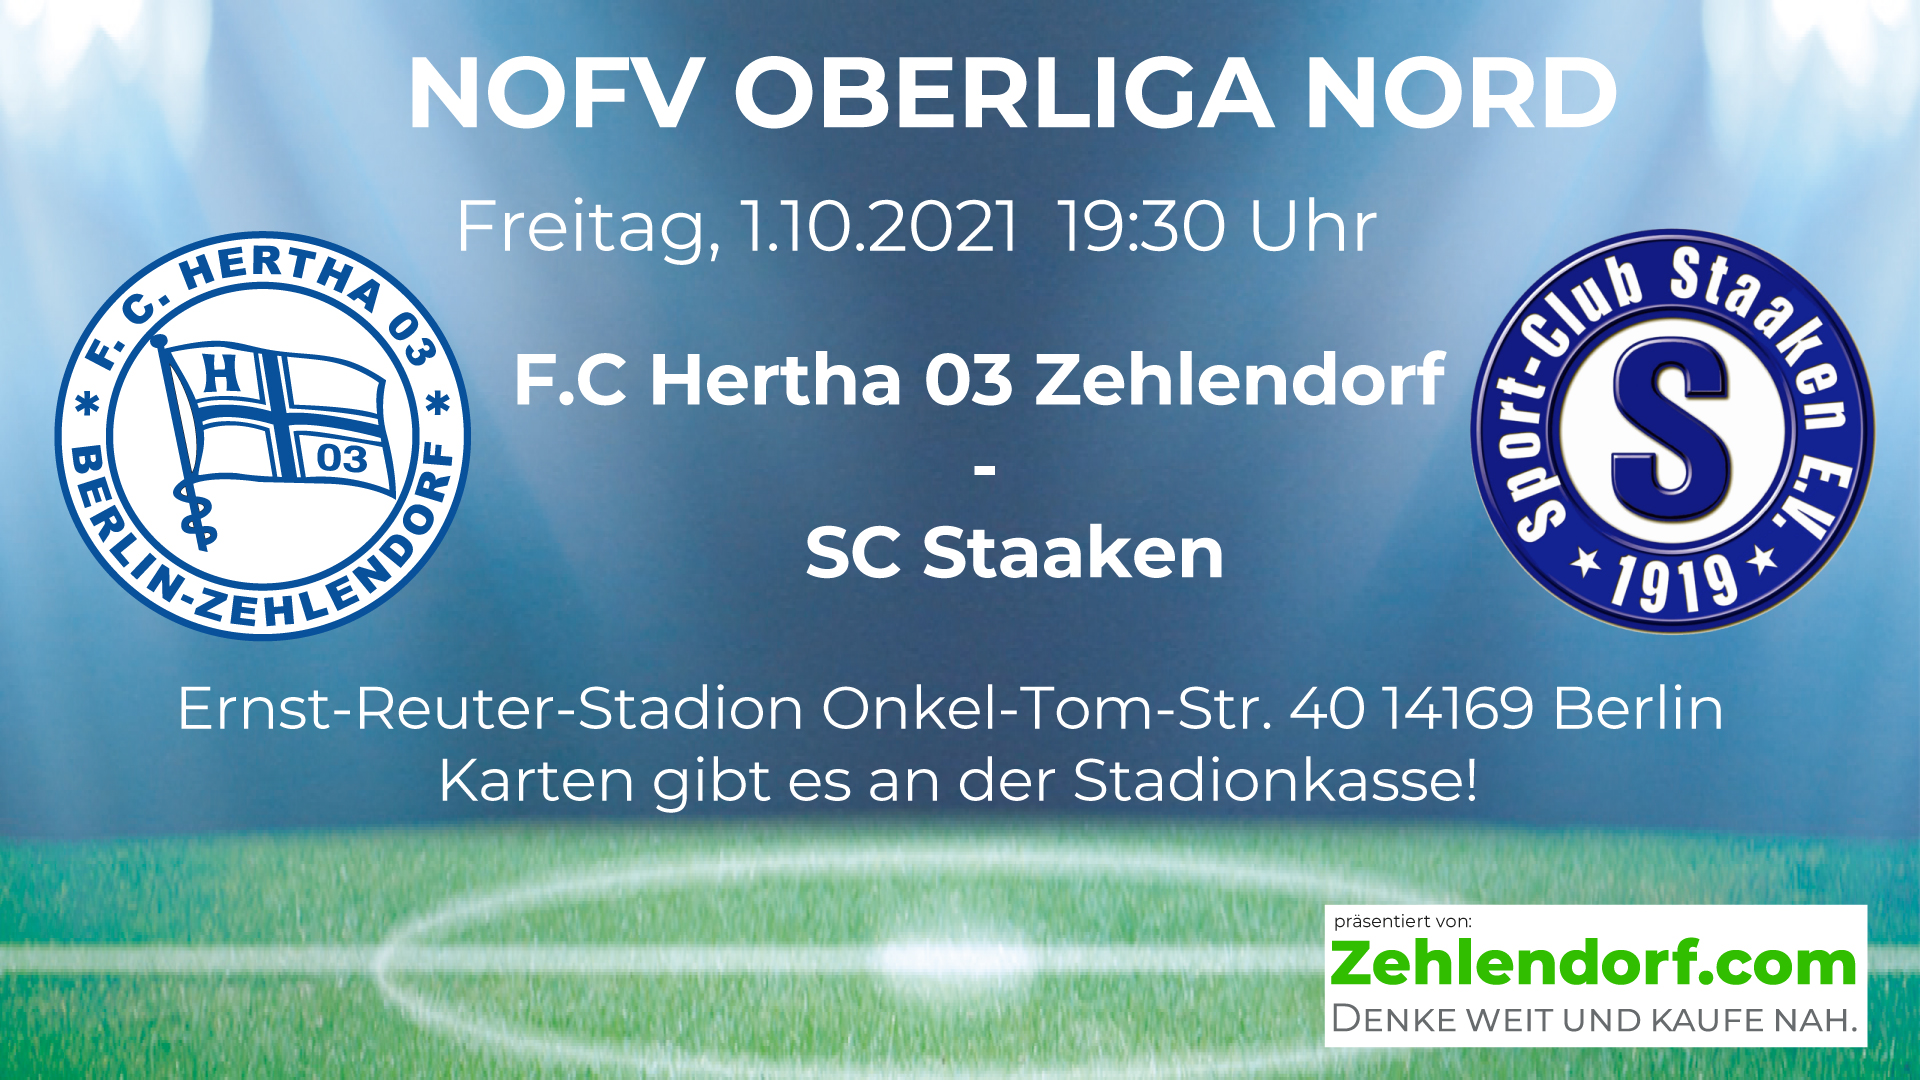 F.C. Hertha 03 Zehlendorf vs. SC Staaken am 01.10.2021